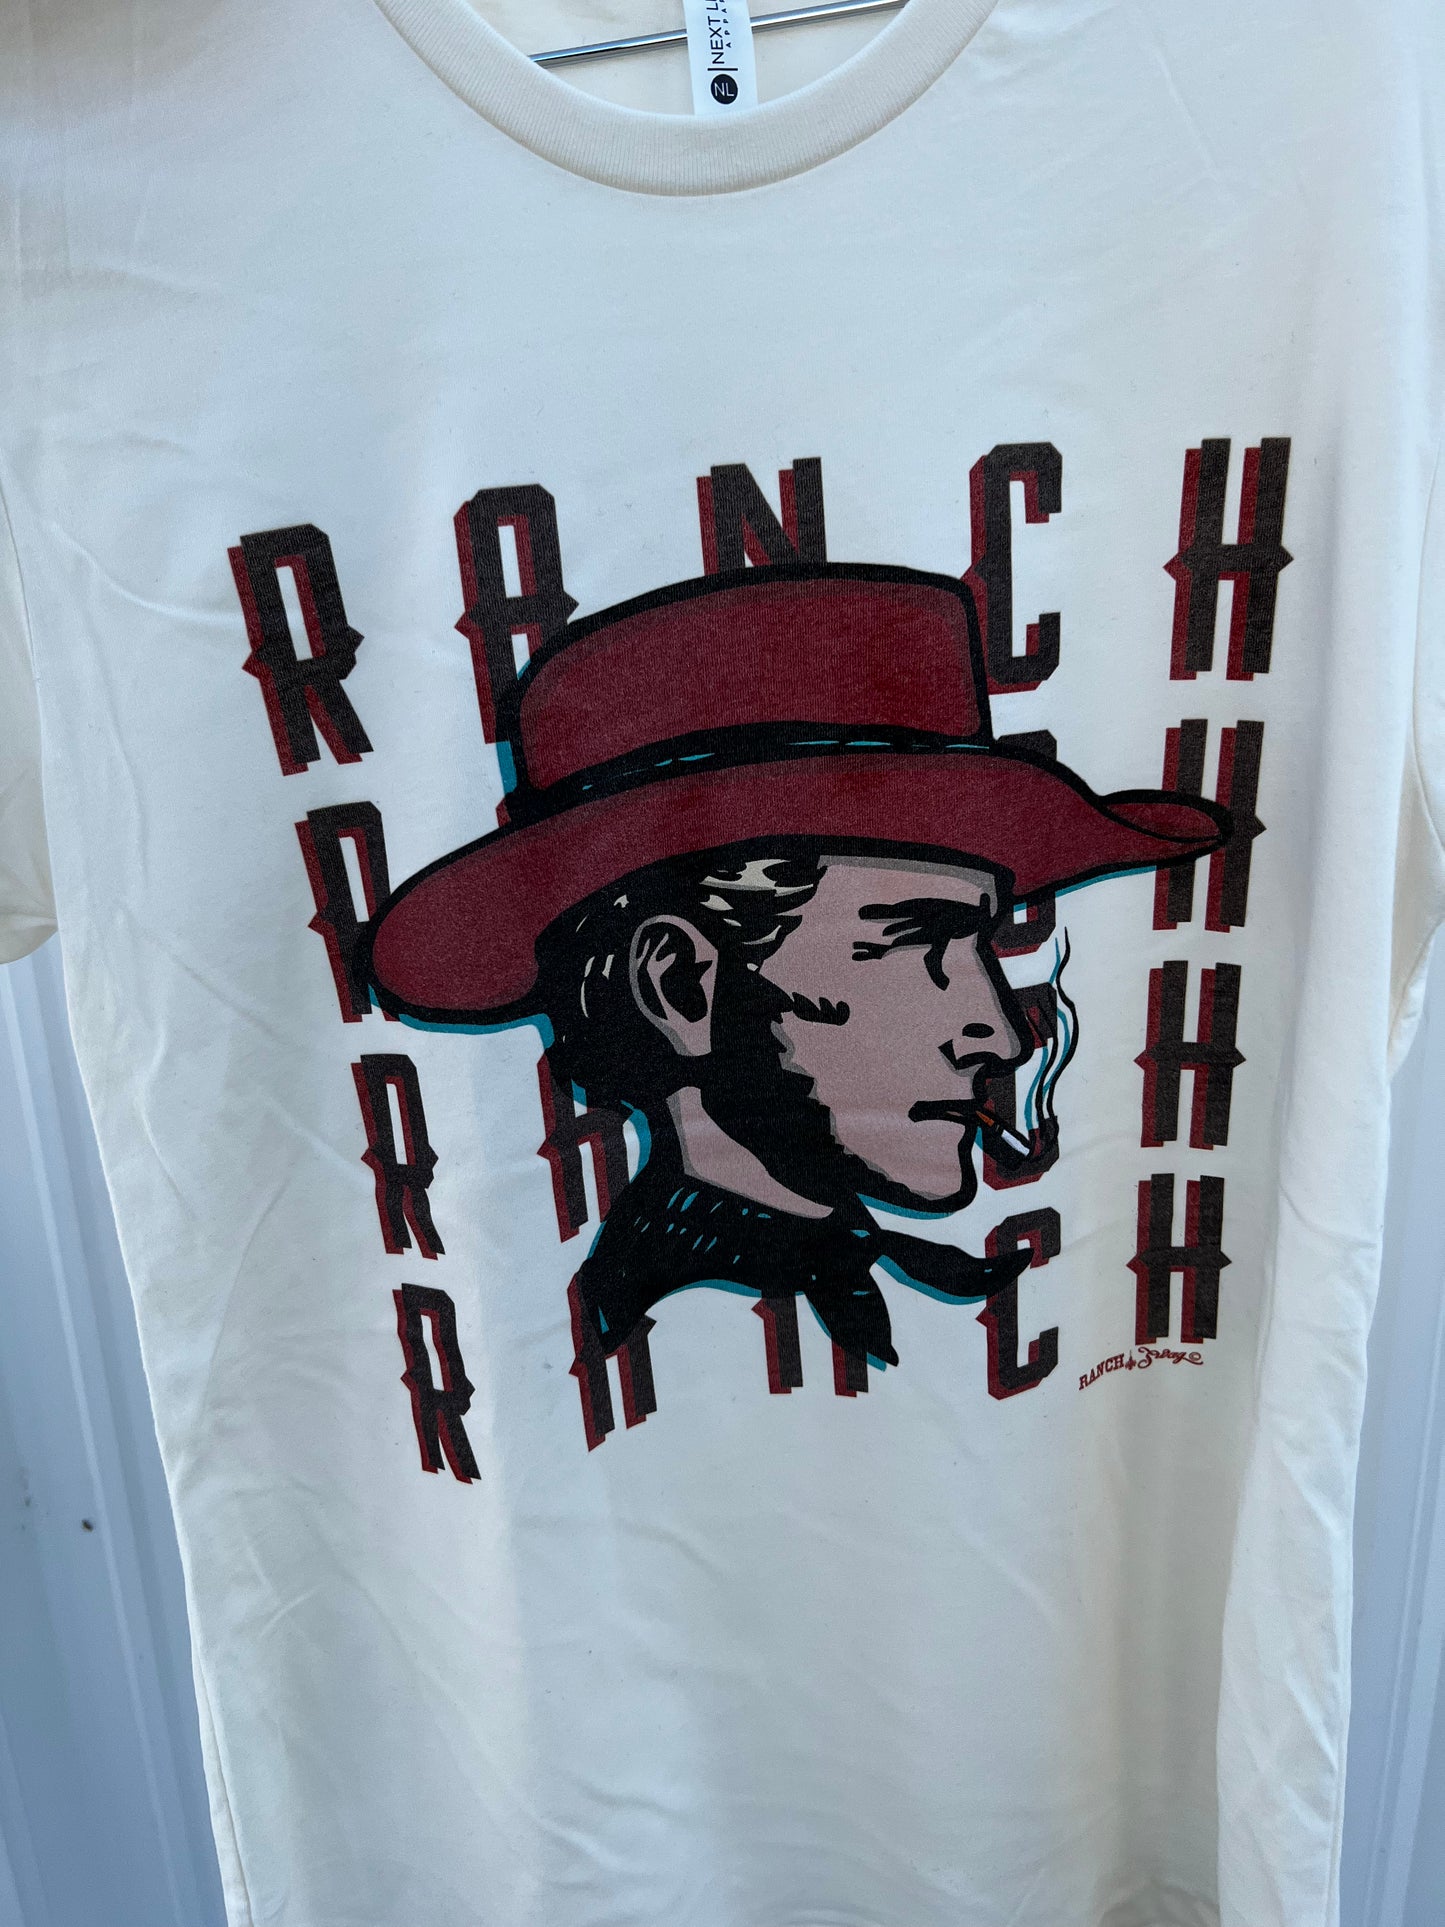 Ranch Ranch Ranch Tee